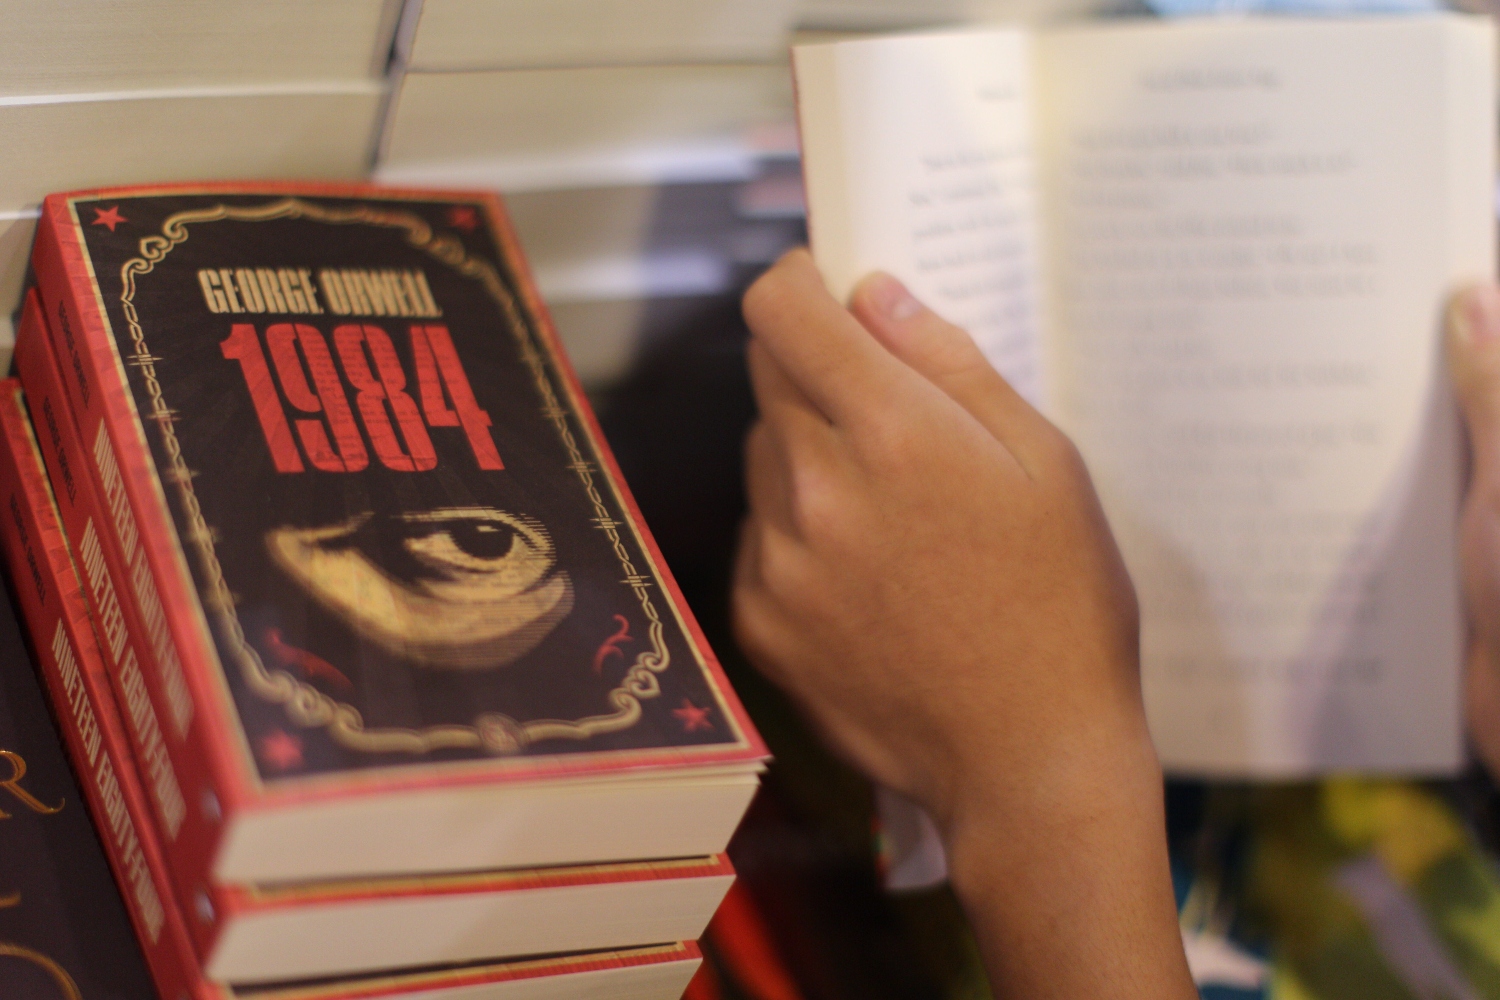 1984; George Orwell – The Secret Bookstore